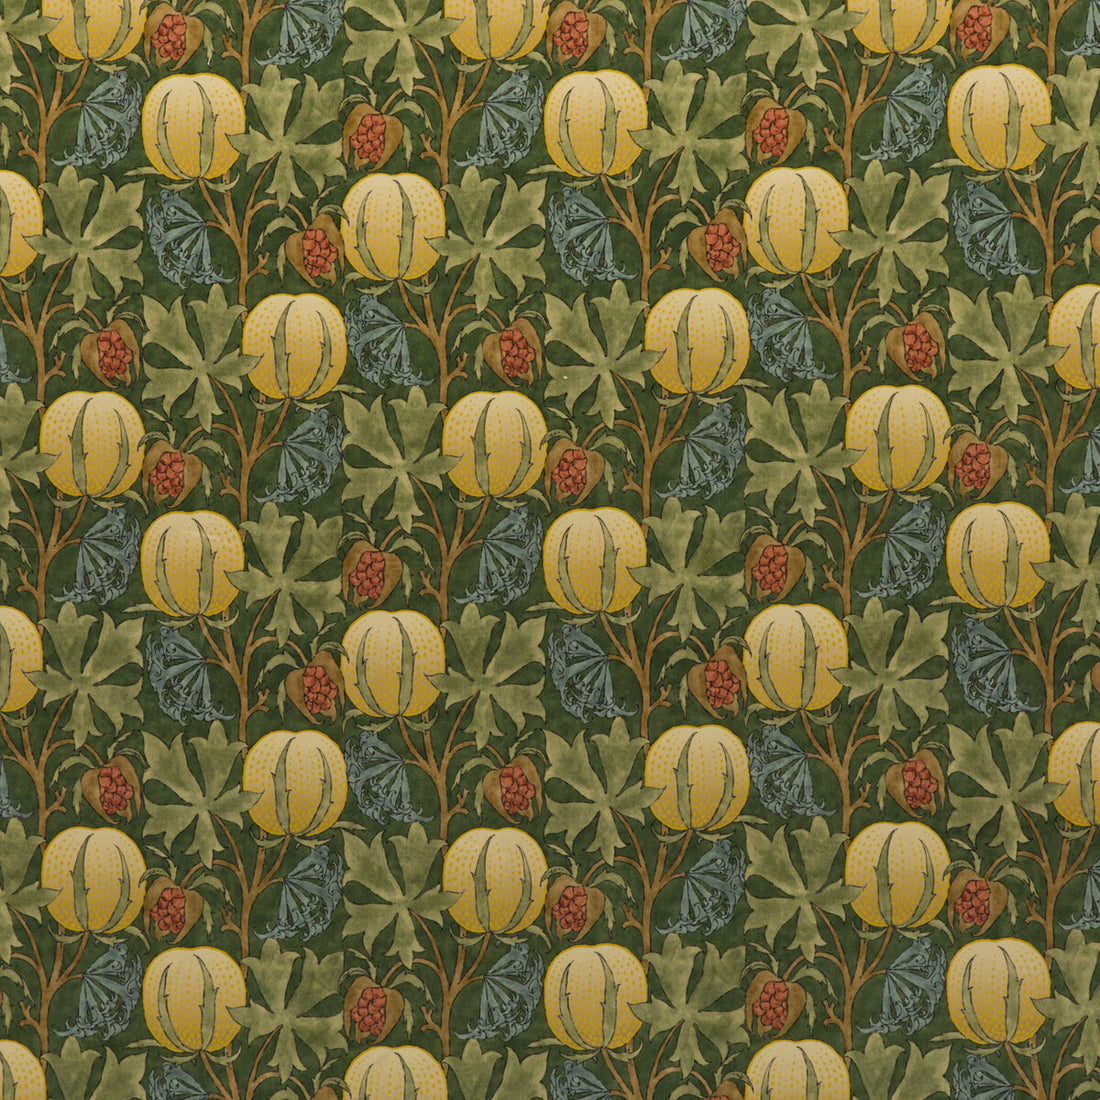 Pumpkins Velvet fabric in green/terracotta color - pattern BP10625.1.0 - by G P &amp; J Baker in the Originals V collection